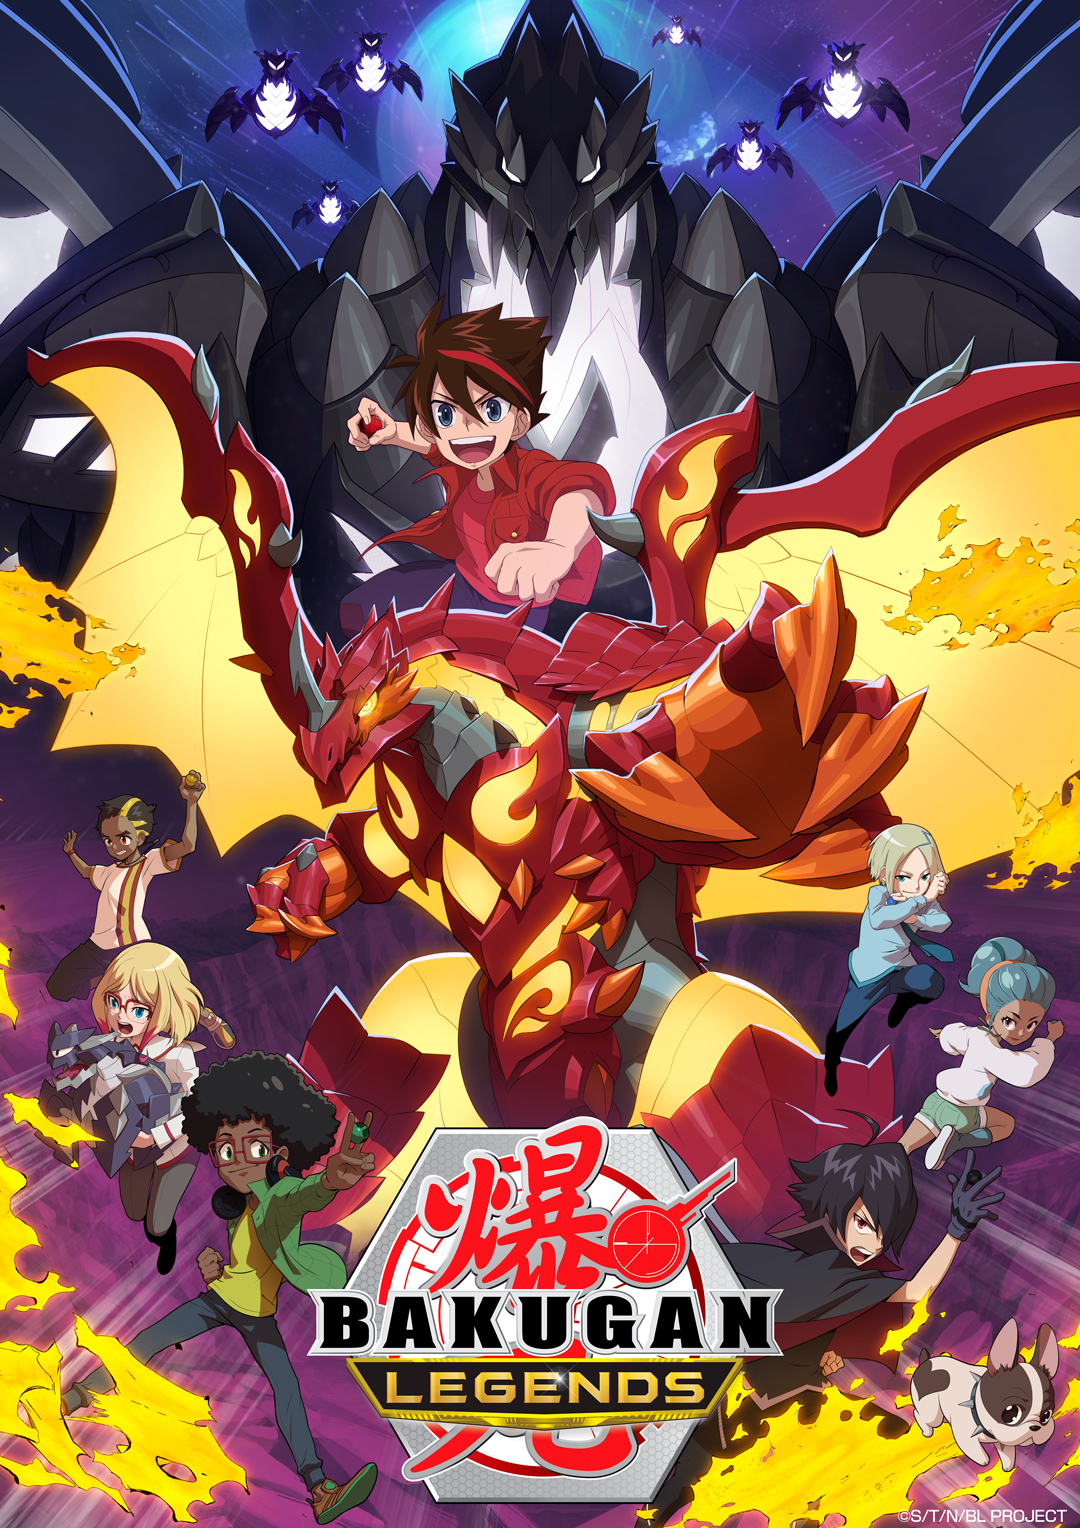 Bakugan to Debut on Cartoon Network on February 25 - News - Anime